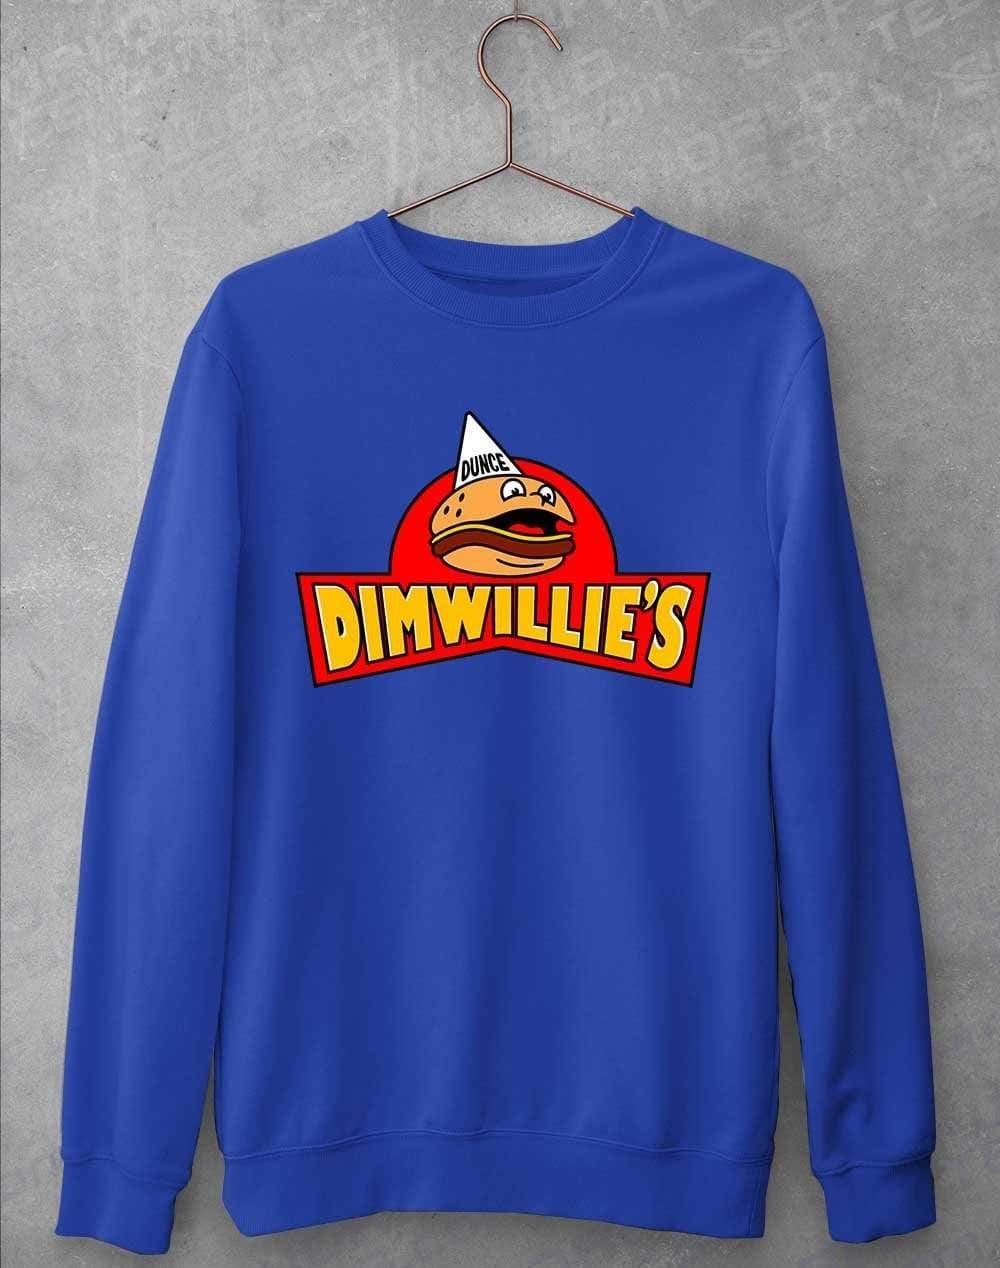 Dimwillies Sweatshirt S / Royal Blue  - Off World Tees